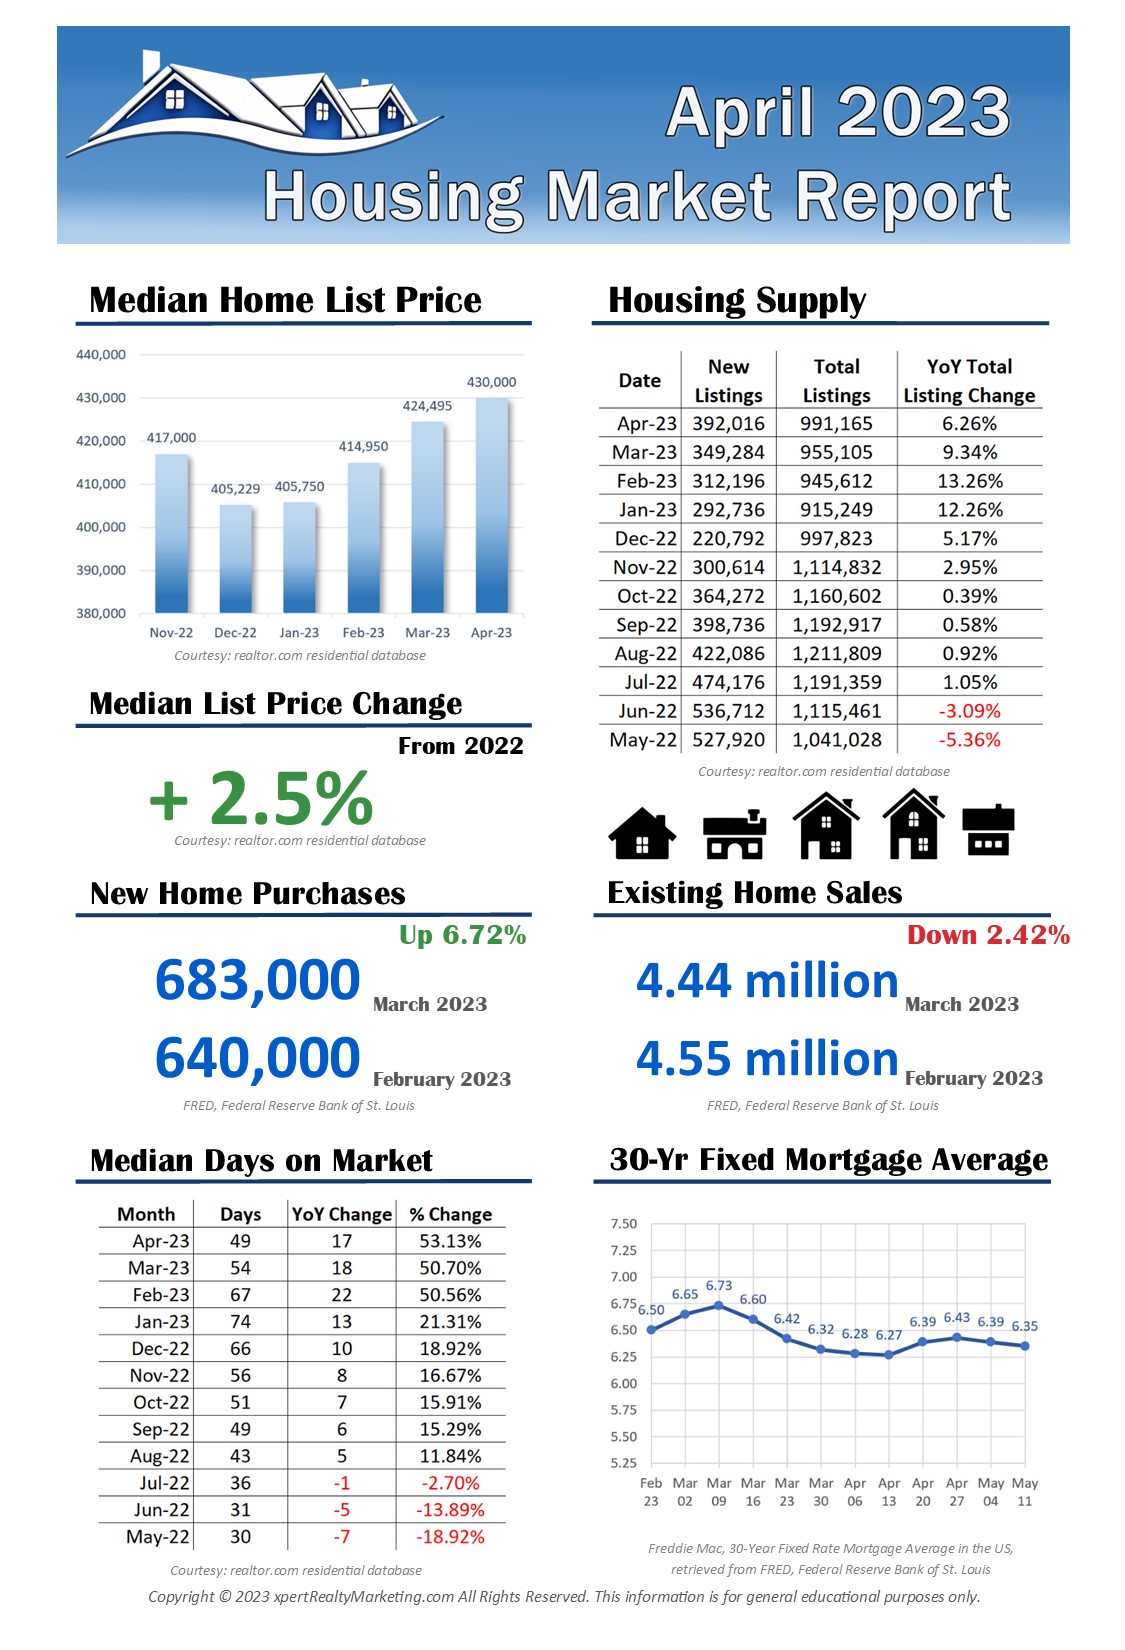 April 2023 U.S. Housing Market Report Infographic